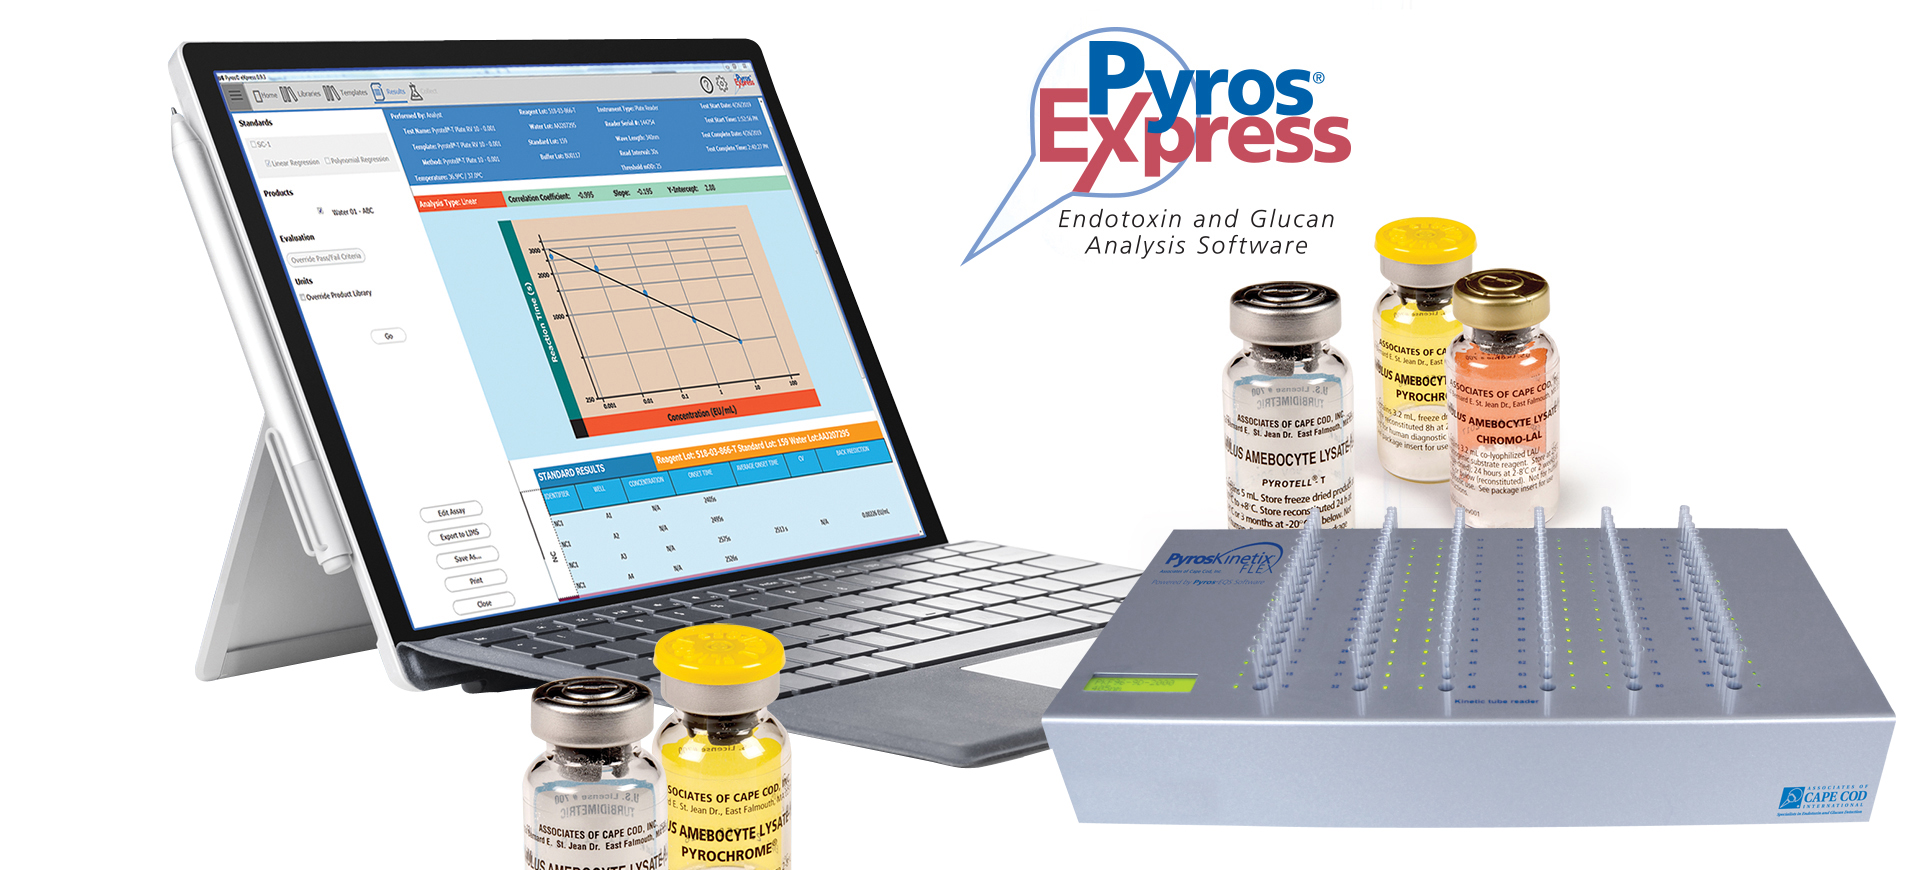 Pyros Kinetix® Flex细菌内毒素定量检测系统